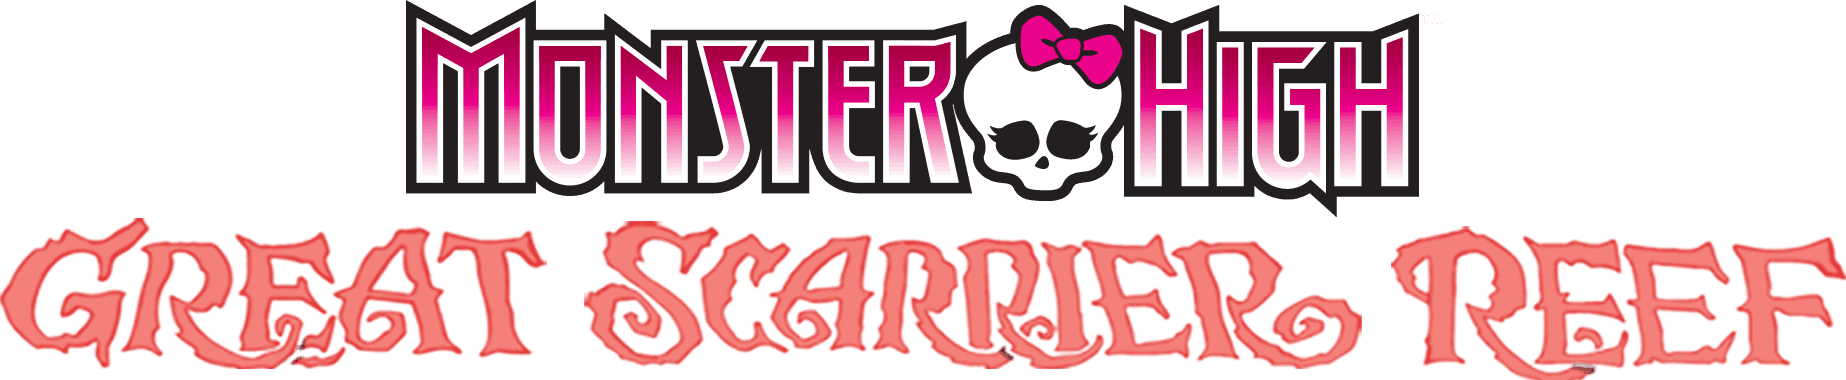 Monster High: Great Scarrier Reef logo